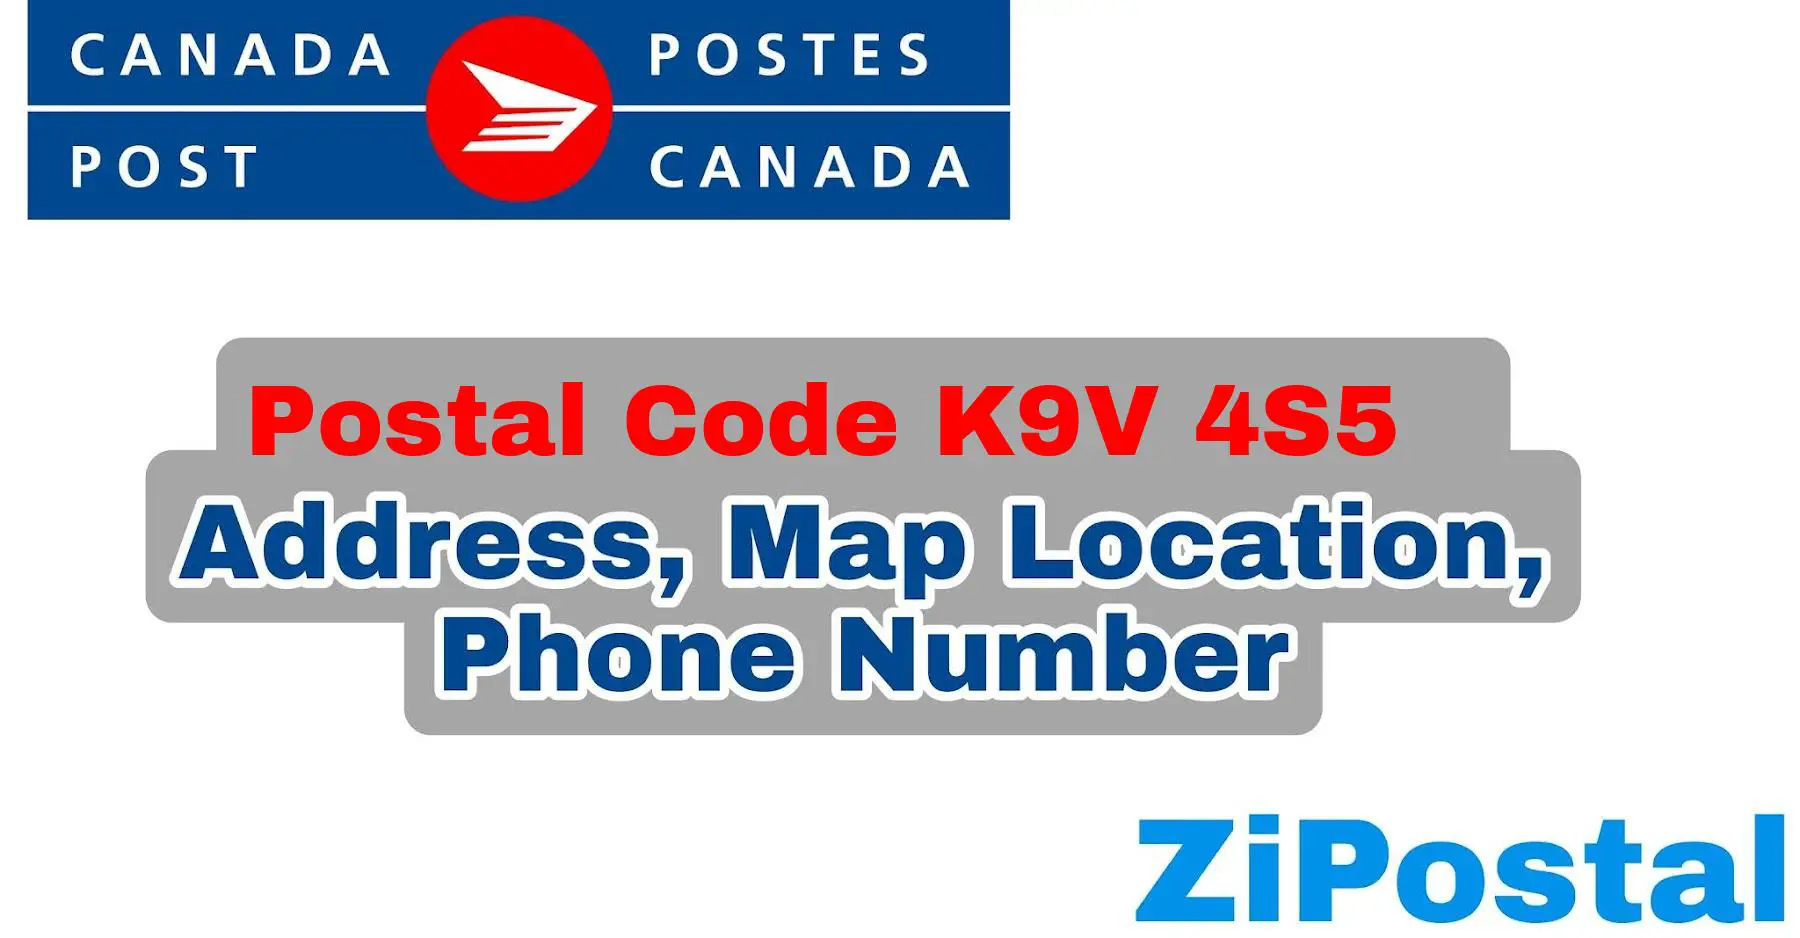 Postal Code K9V 4S5 Address Map Location and Phone Number